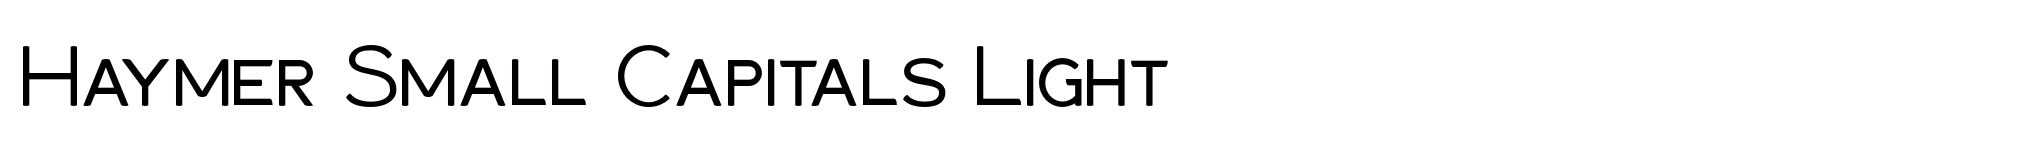 Haymer Small Capitals Light image